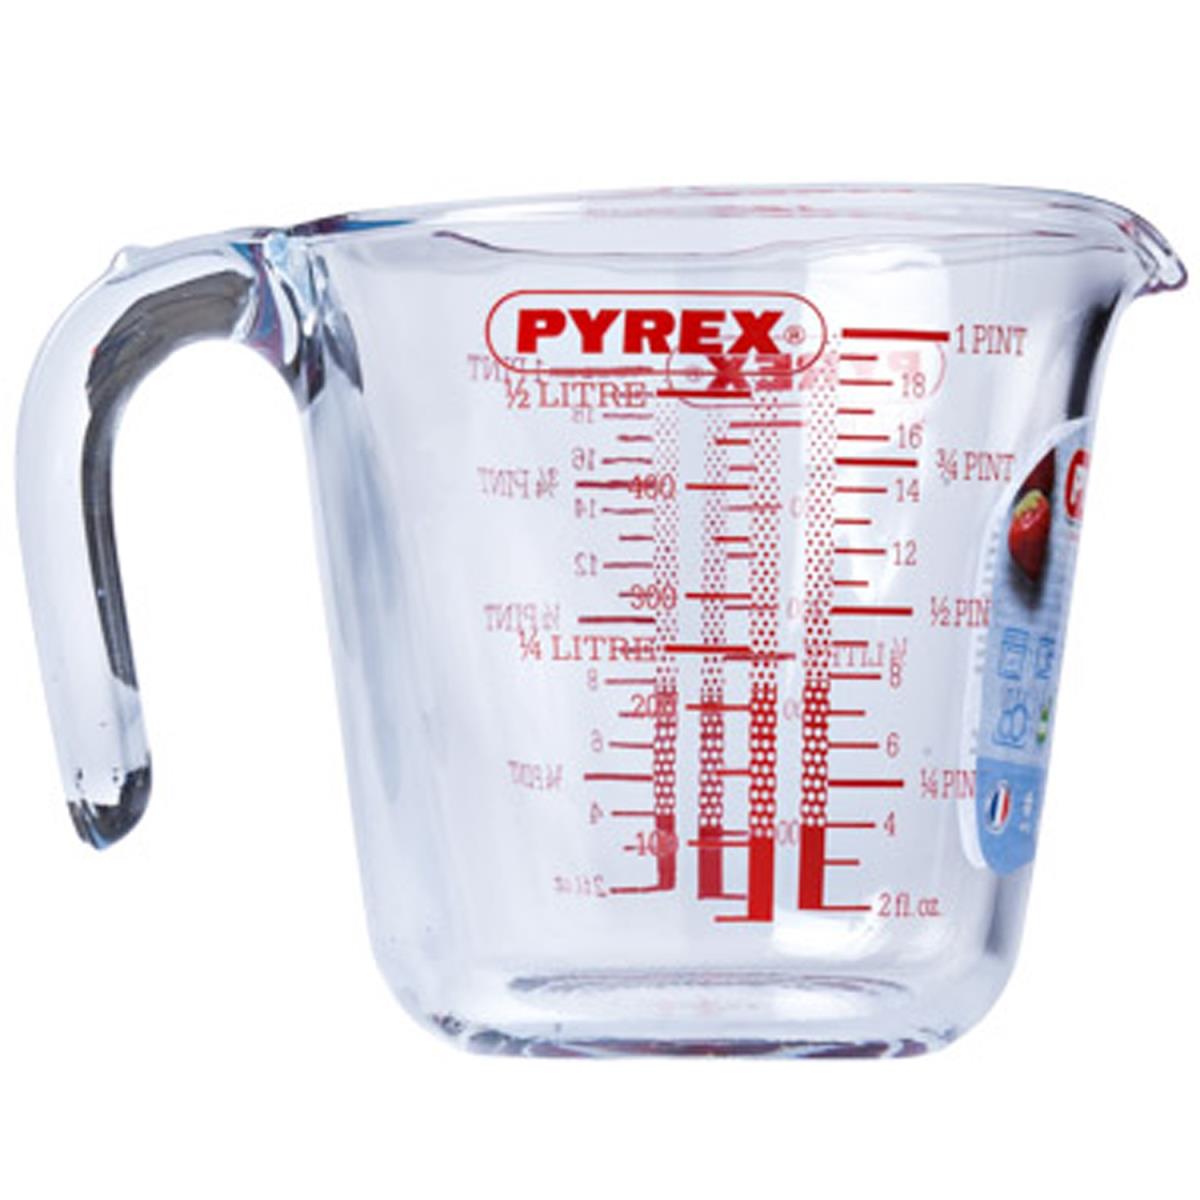 Pyrex 1410 mug